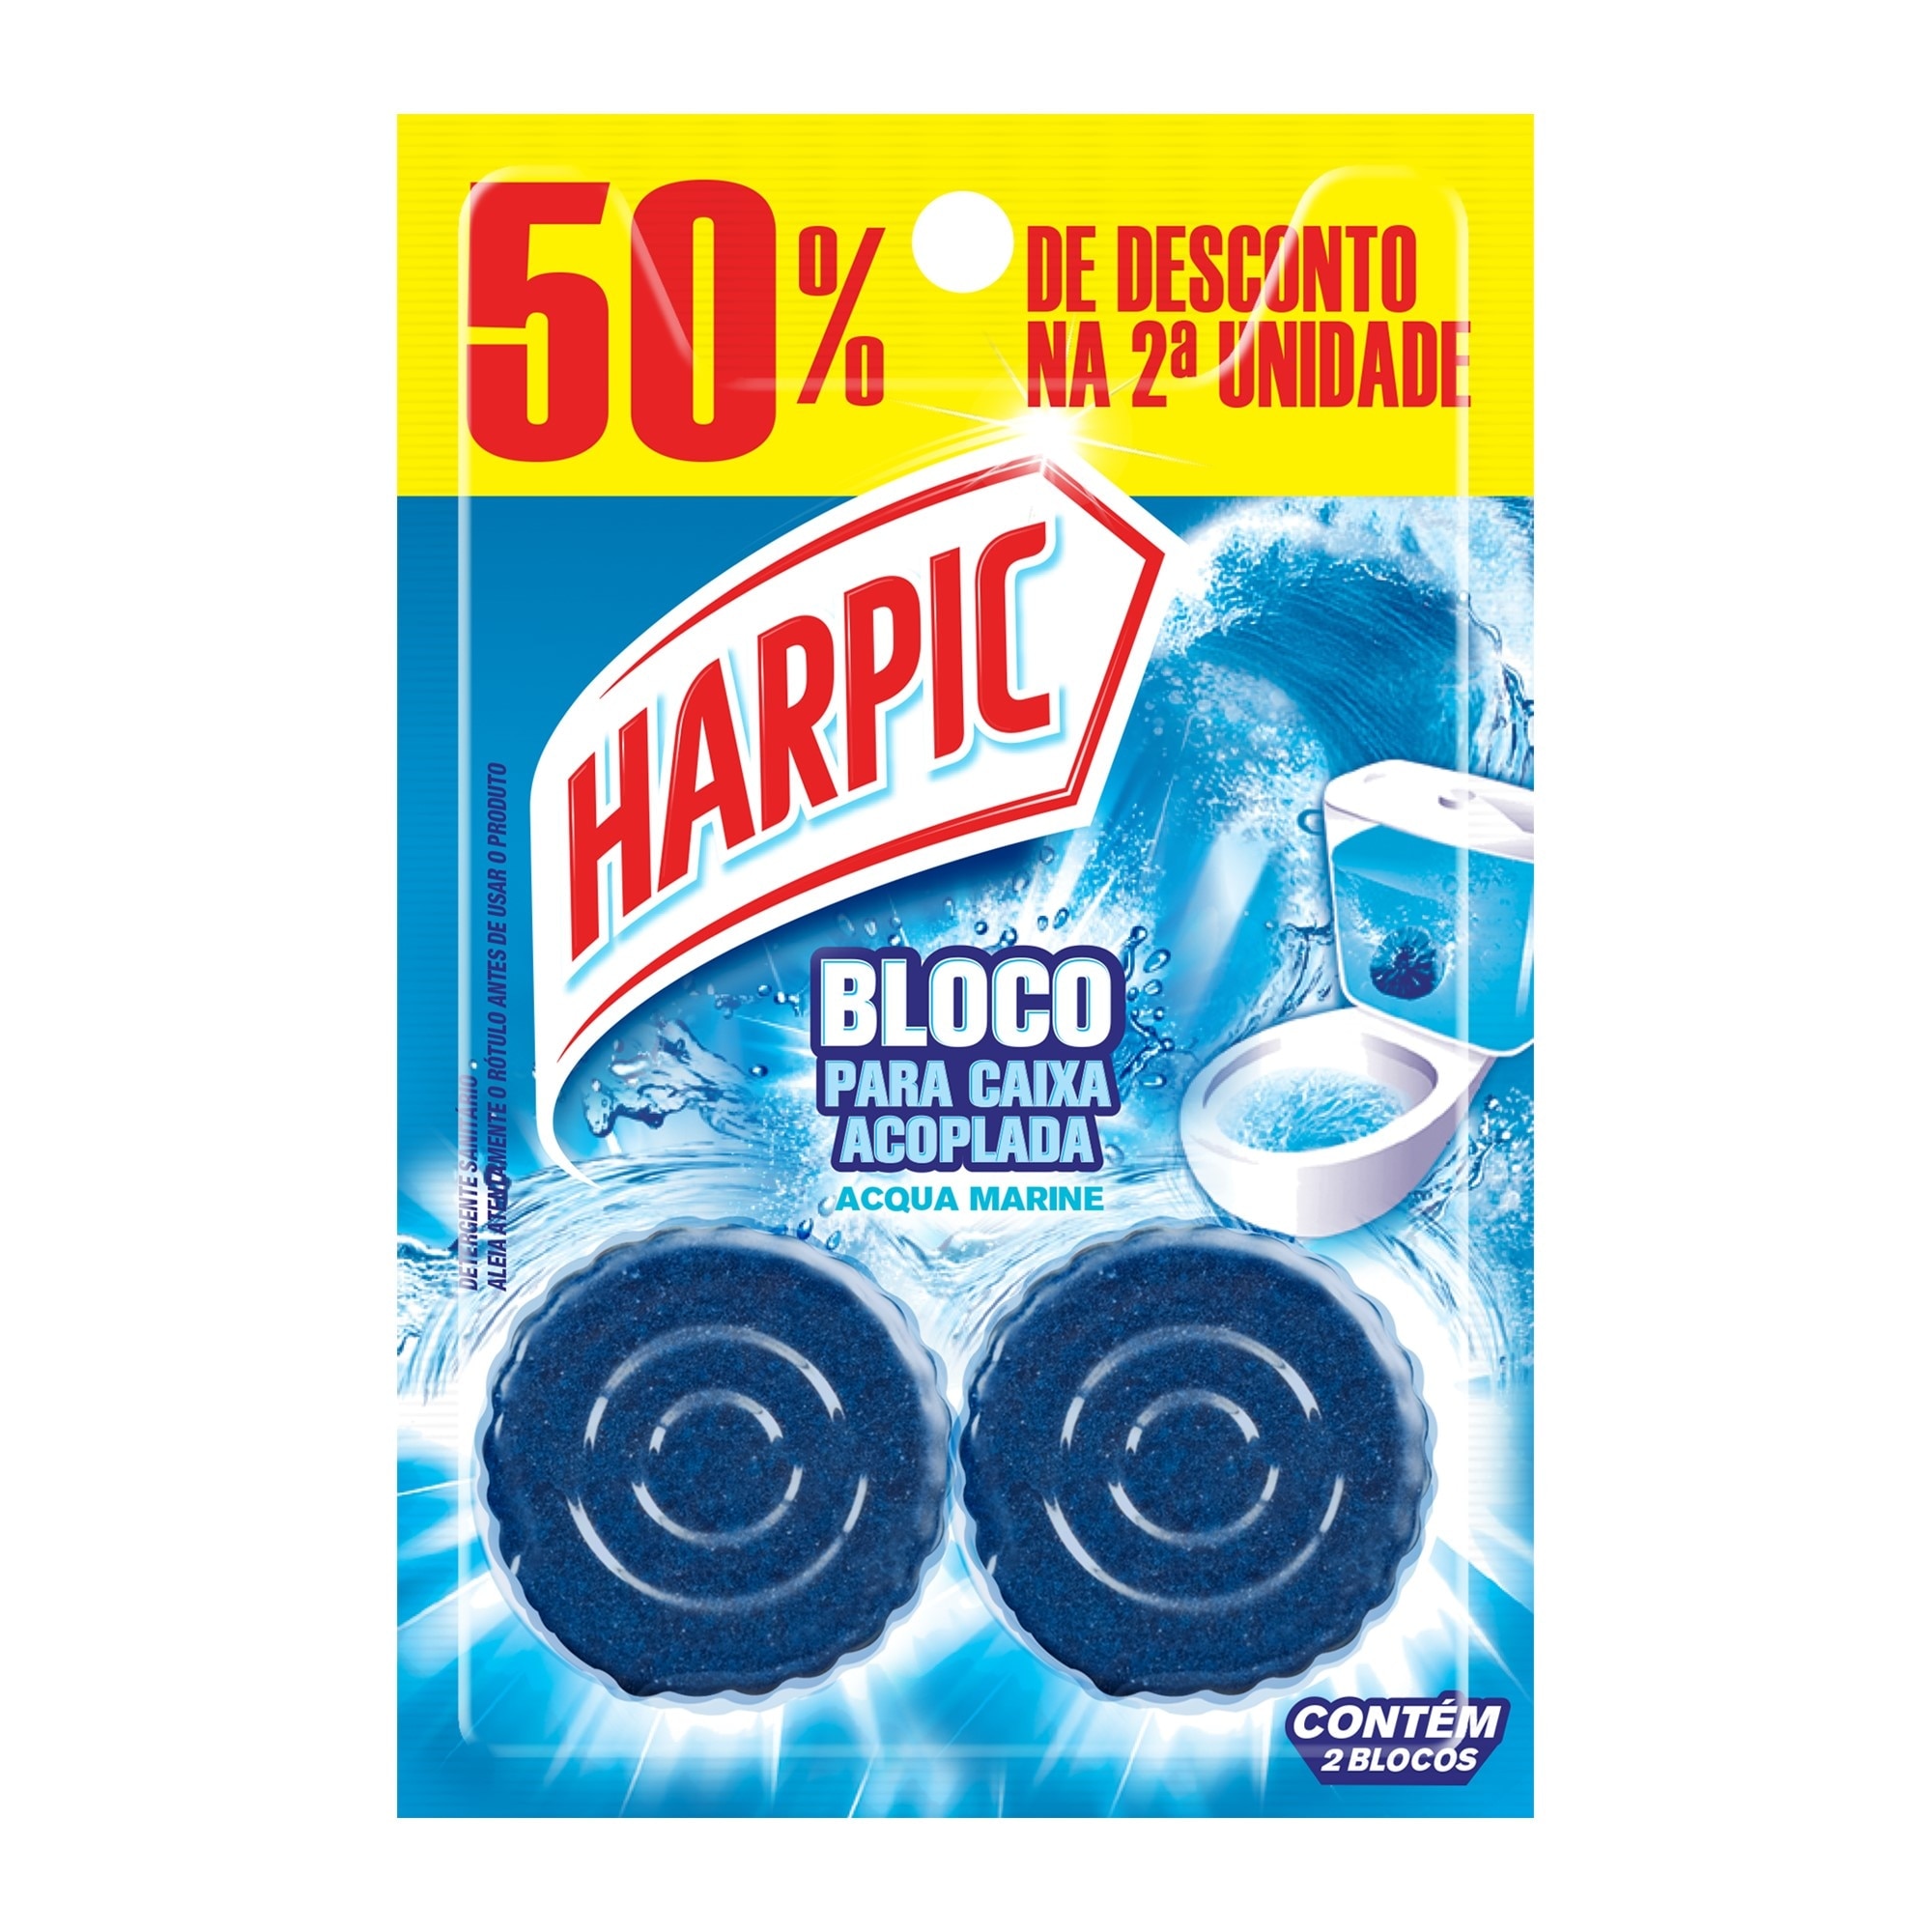 Bloco Harpic para Caixa Acoplada - 50% Desconto na 2ª Unidade 100g